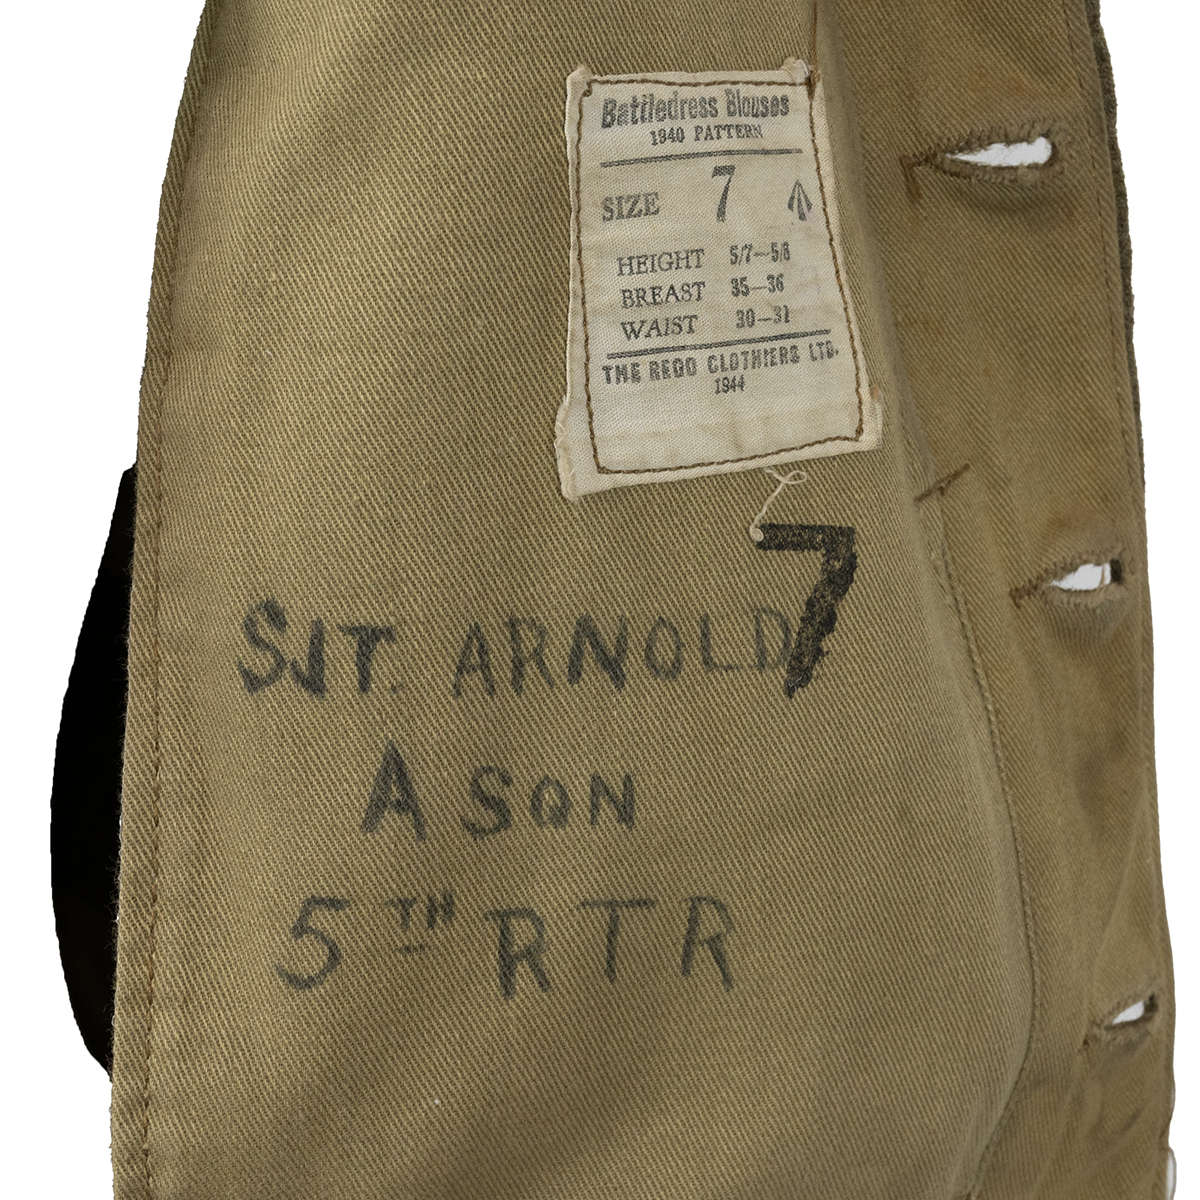 Battledress of Sergeant Arnold of the Royal Tank Regiment. 1938 pattern Battledress (BD) blouse w... - Image 6 of 6